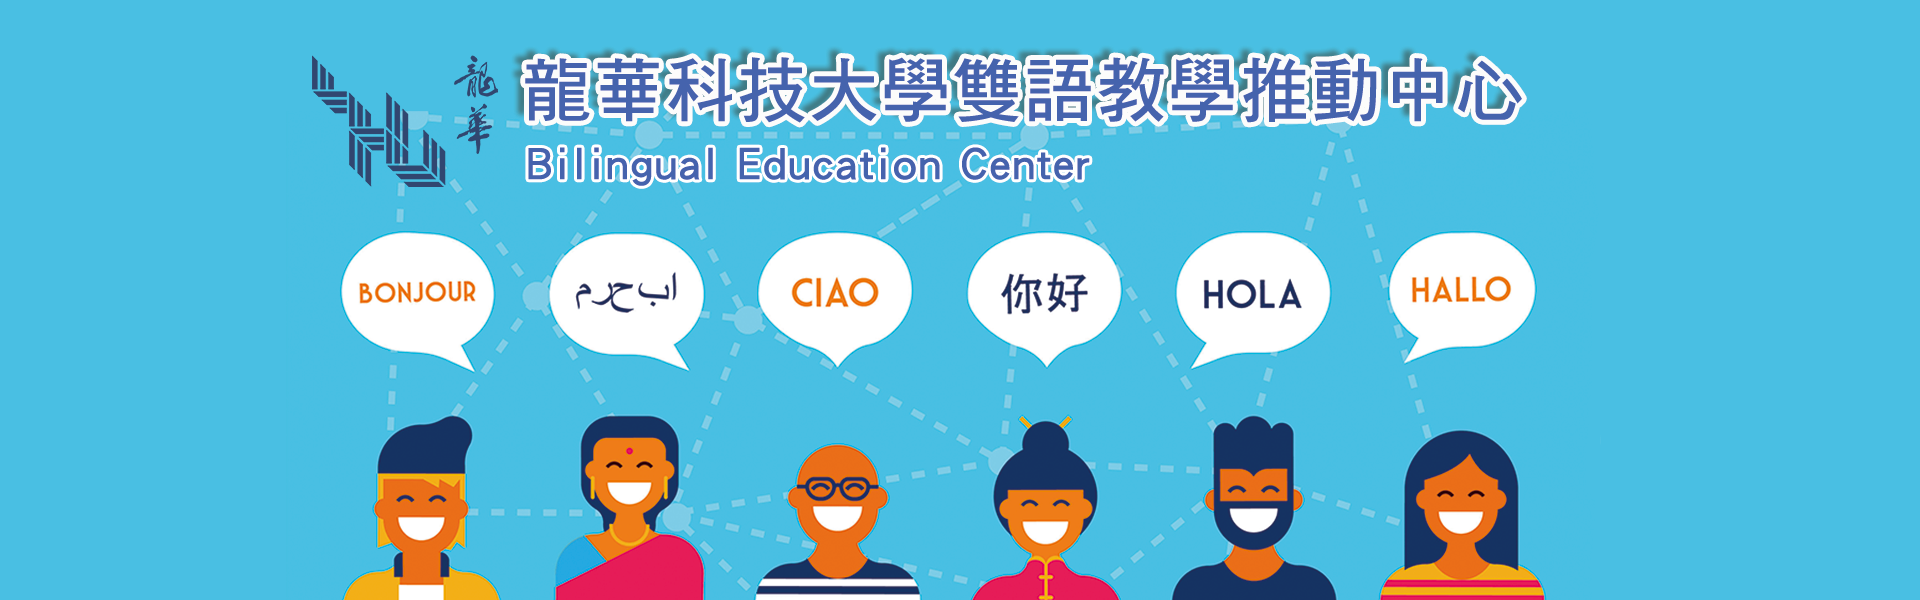 Bilingual Education Center title